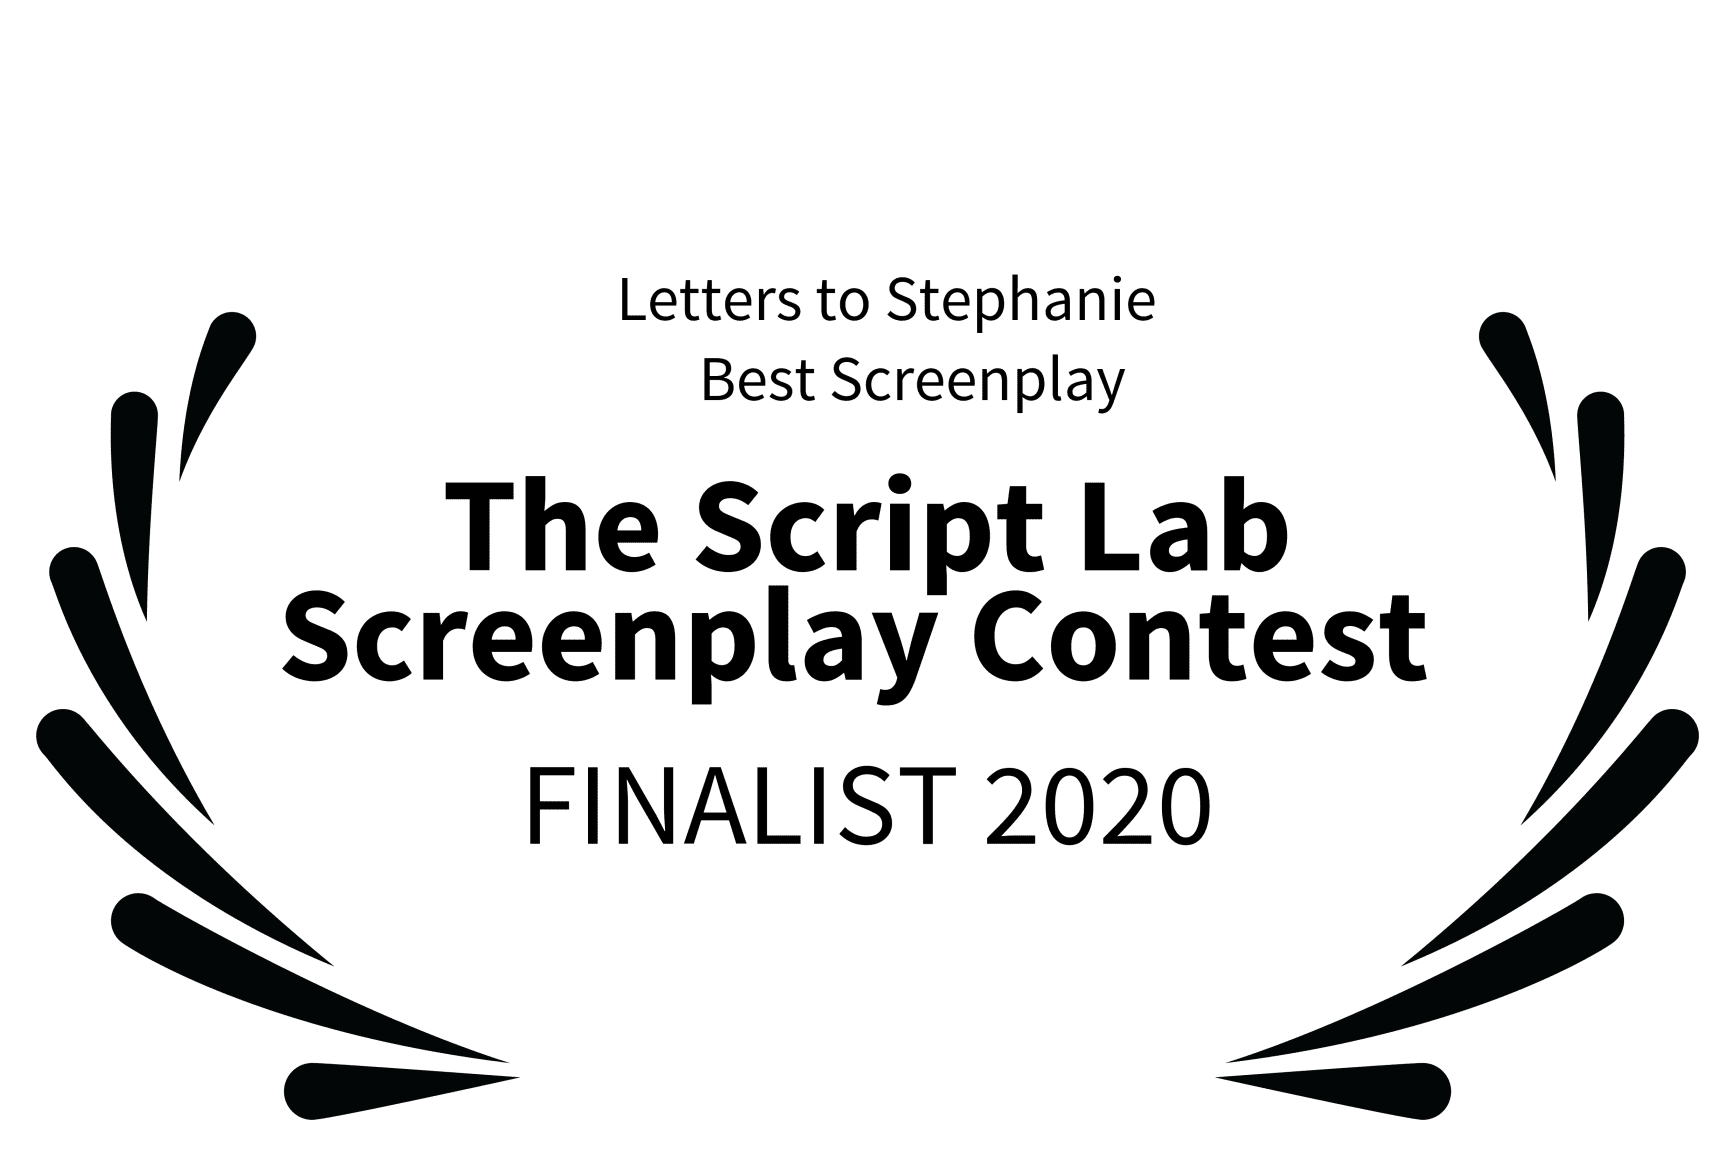 The script lab screenplay contest finalist